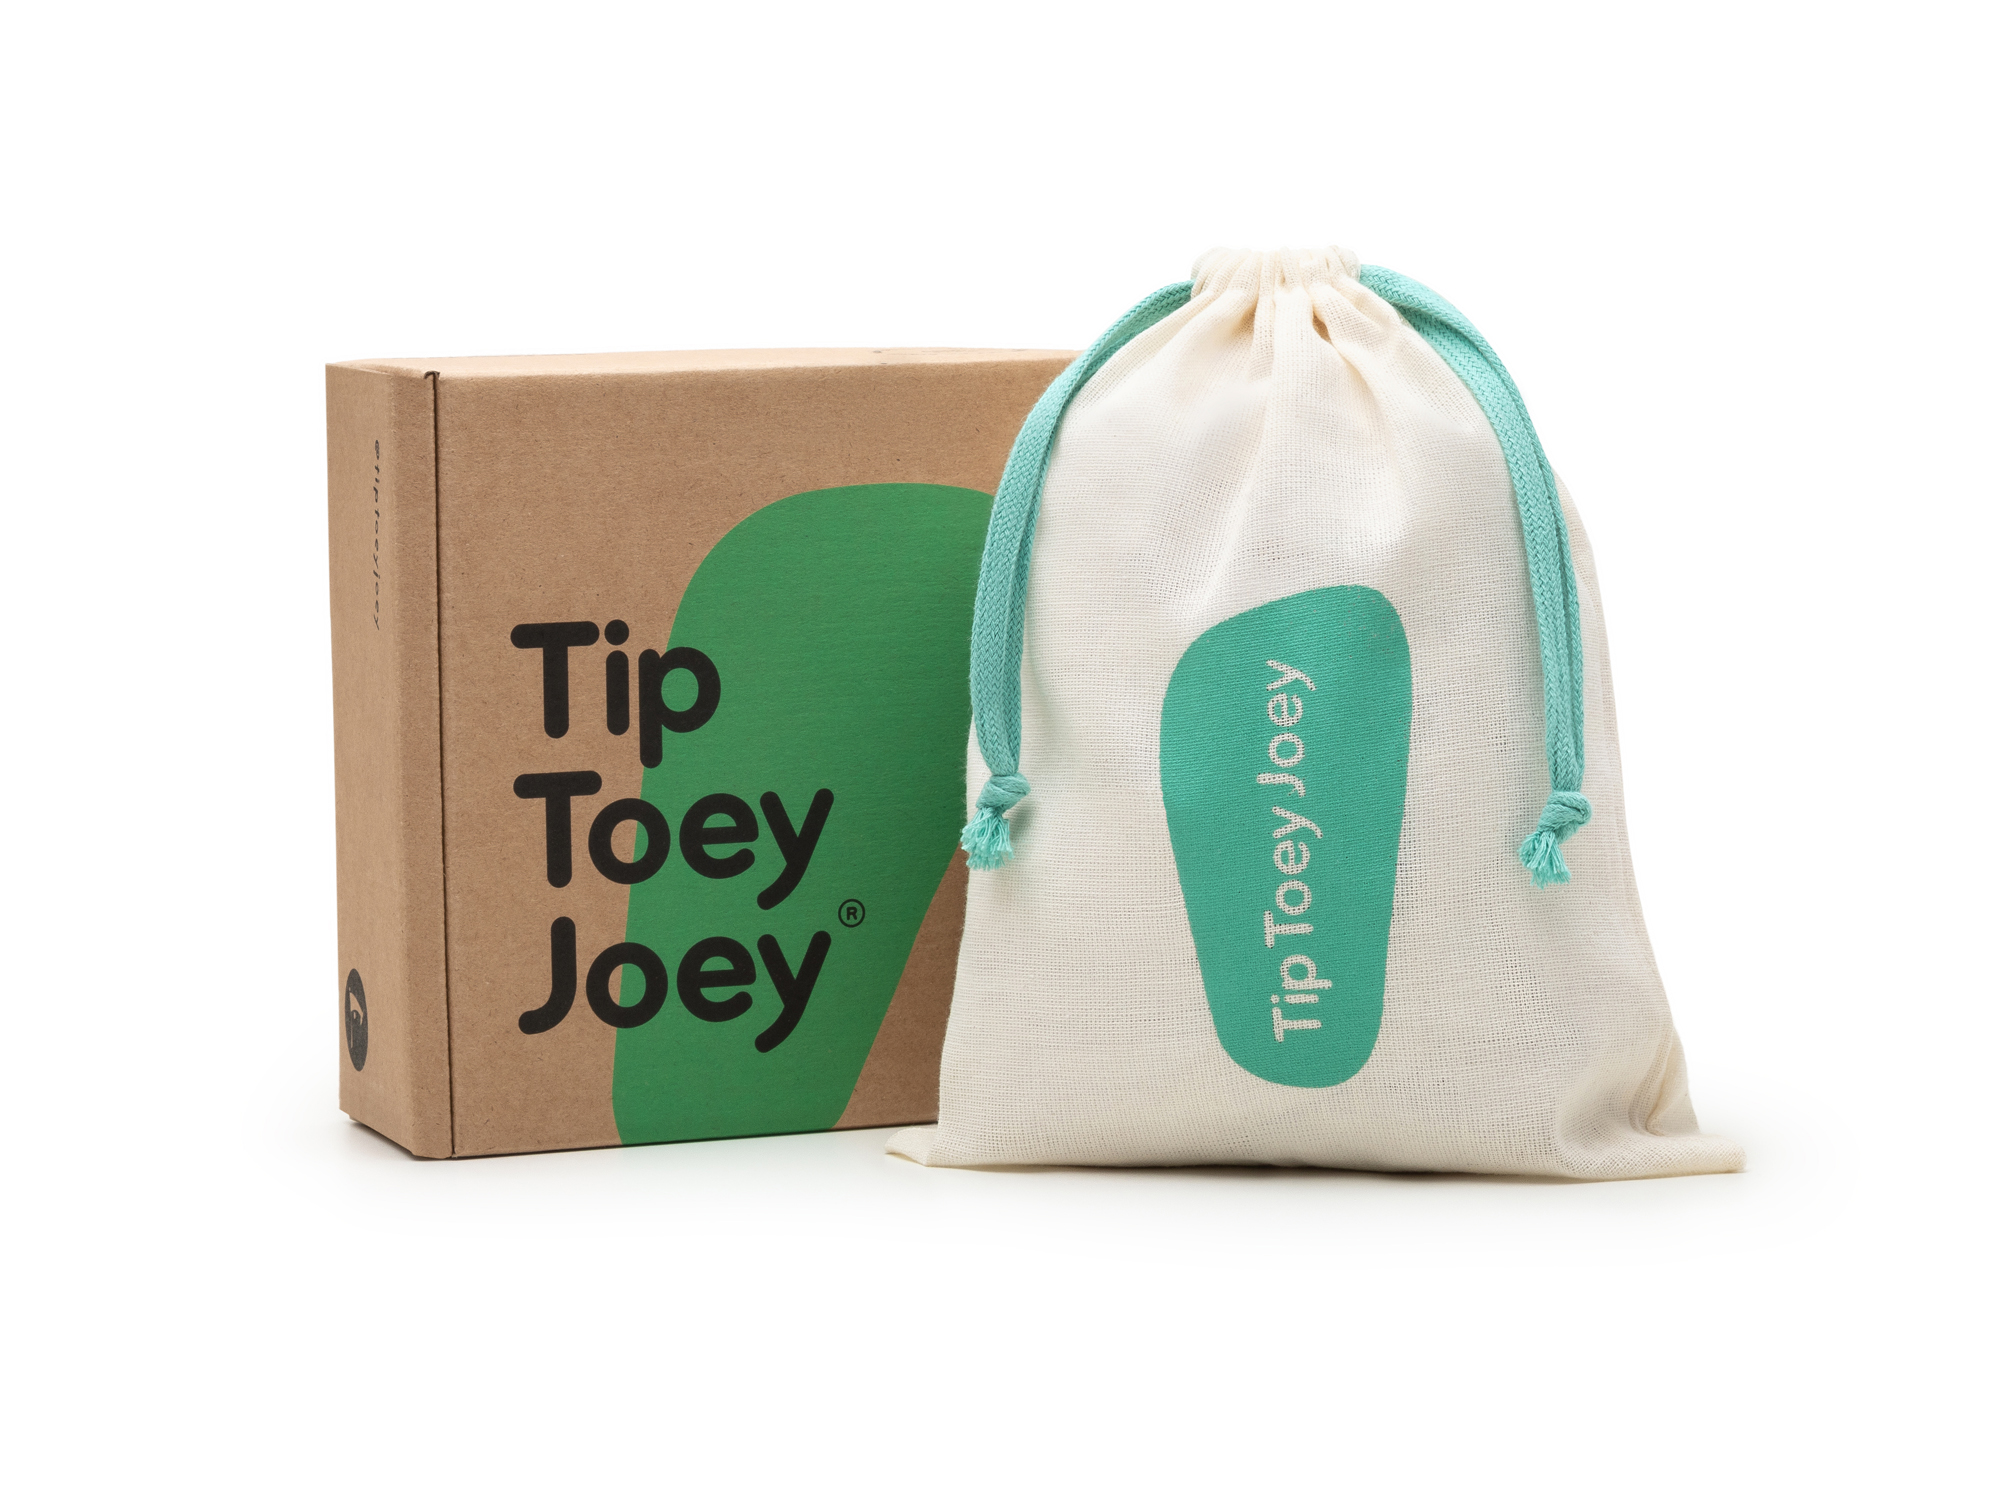 UP & GO Sneakers for Girls Easy | Tip Toey Joey - Australia - 5